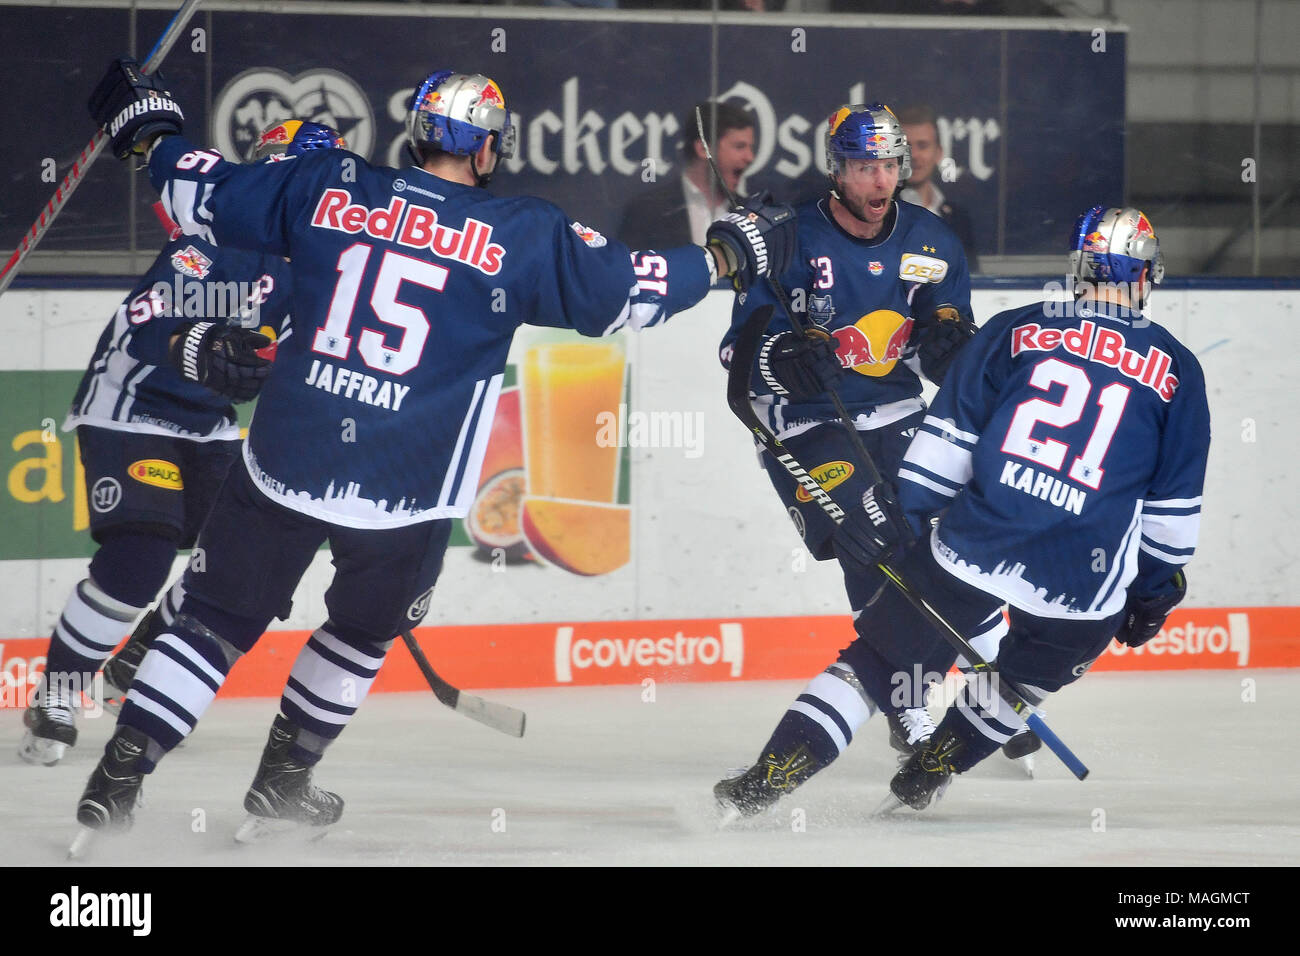 Deutsche Eishockey Liga 2 High Resolution Stock Photography and Images -  Alamy